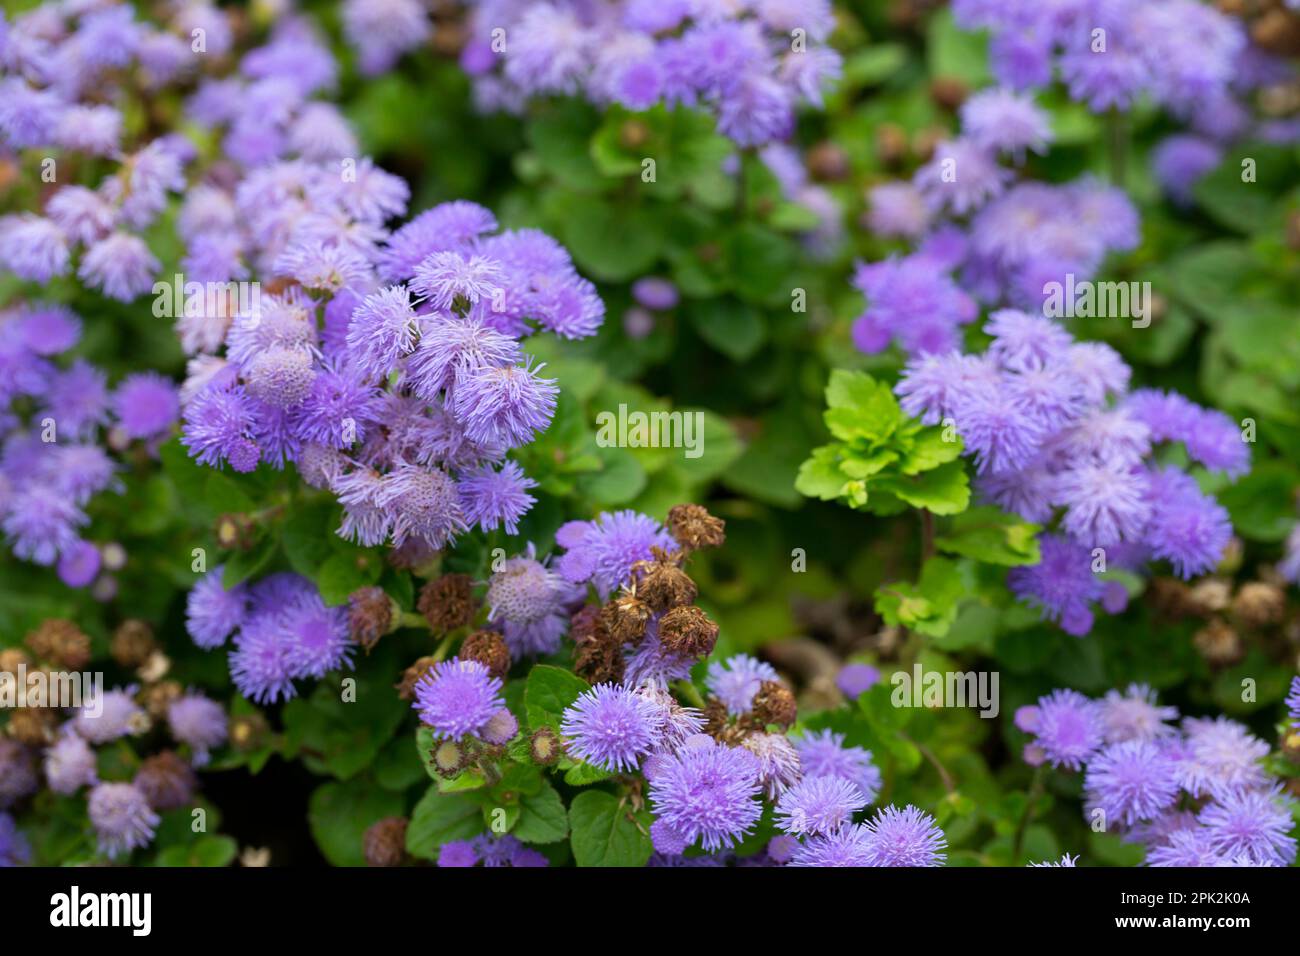 Flossflower Ageratum houstonianum in the garden, Granada region, Spain. Purple flowers ageratum in the garden. Stock Photo